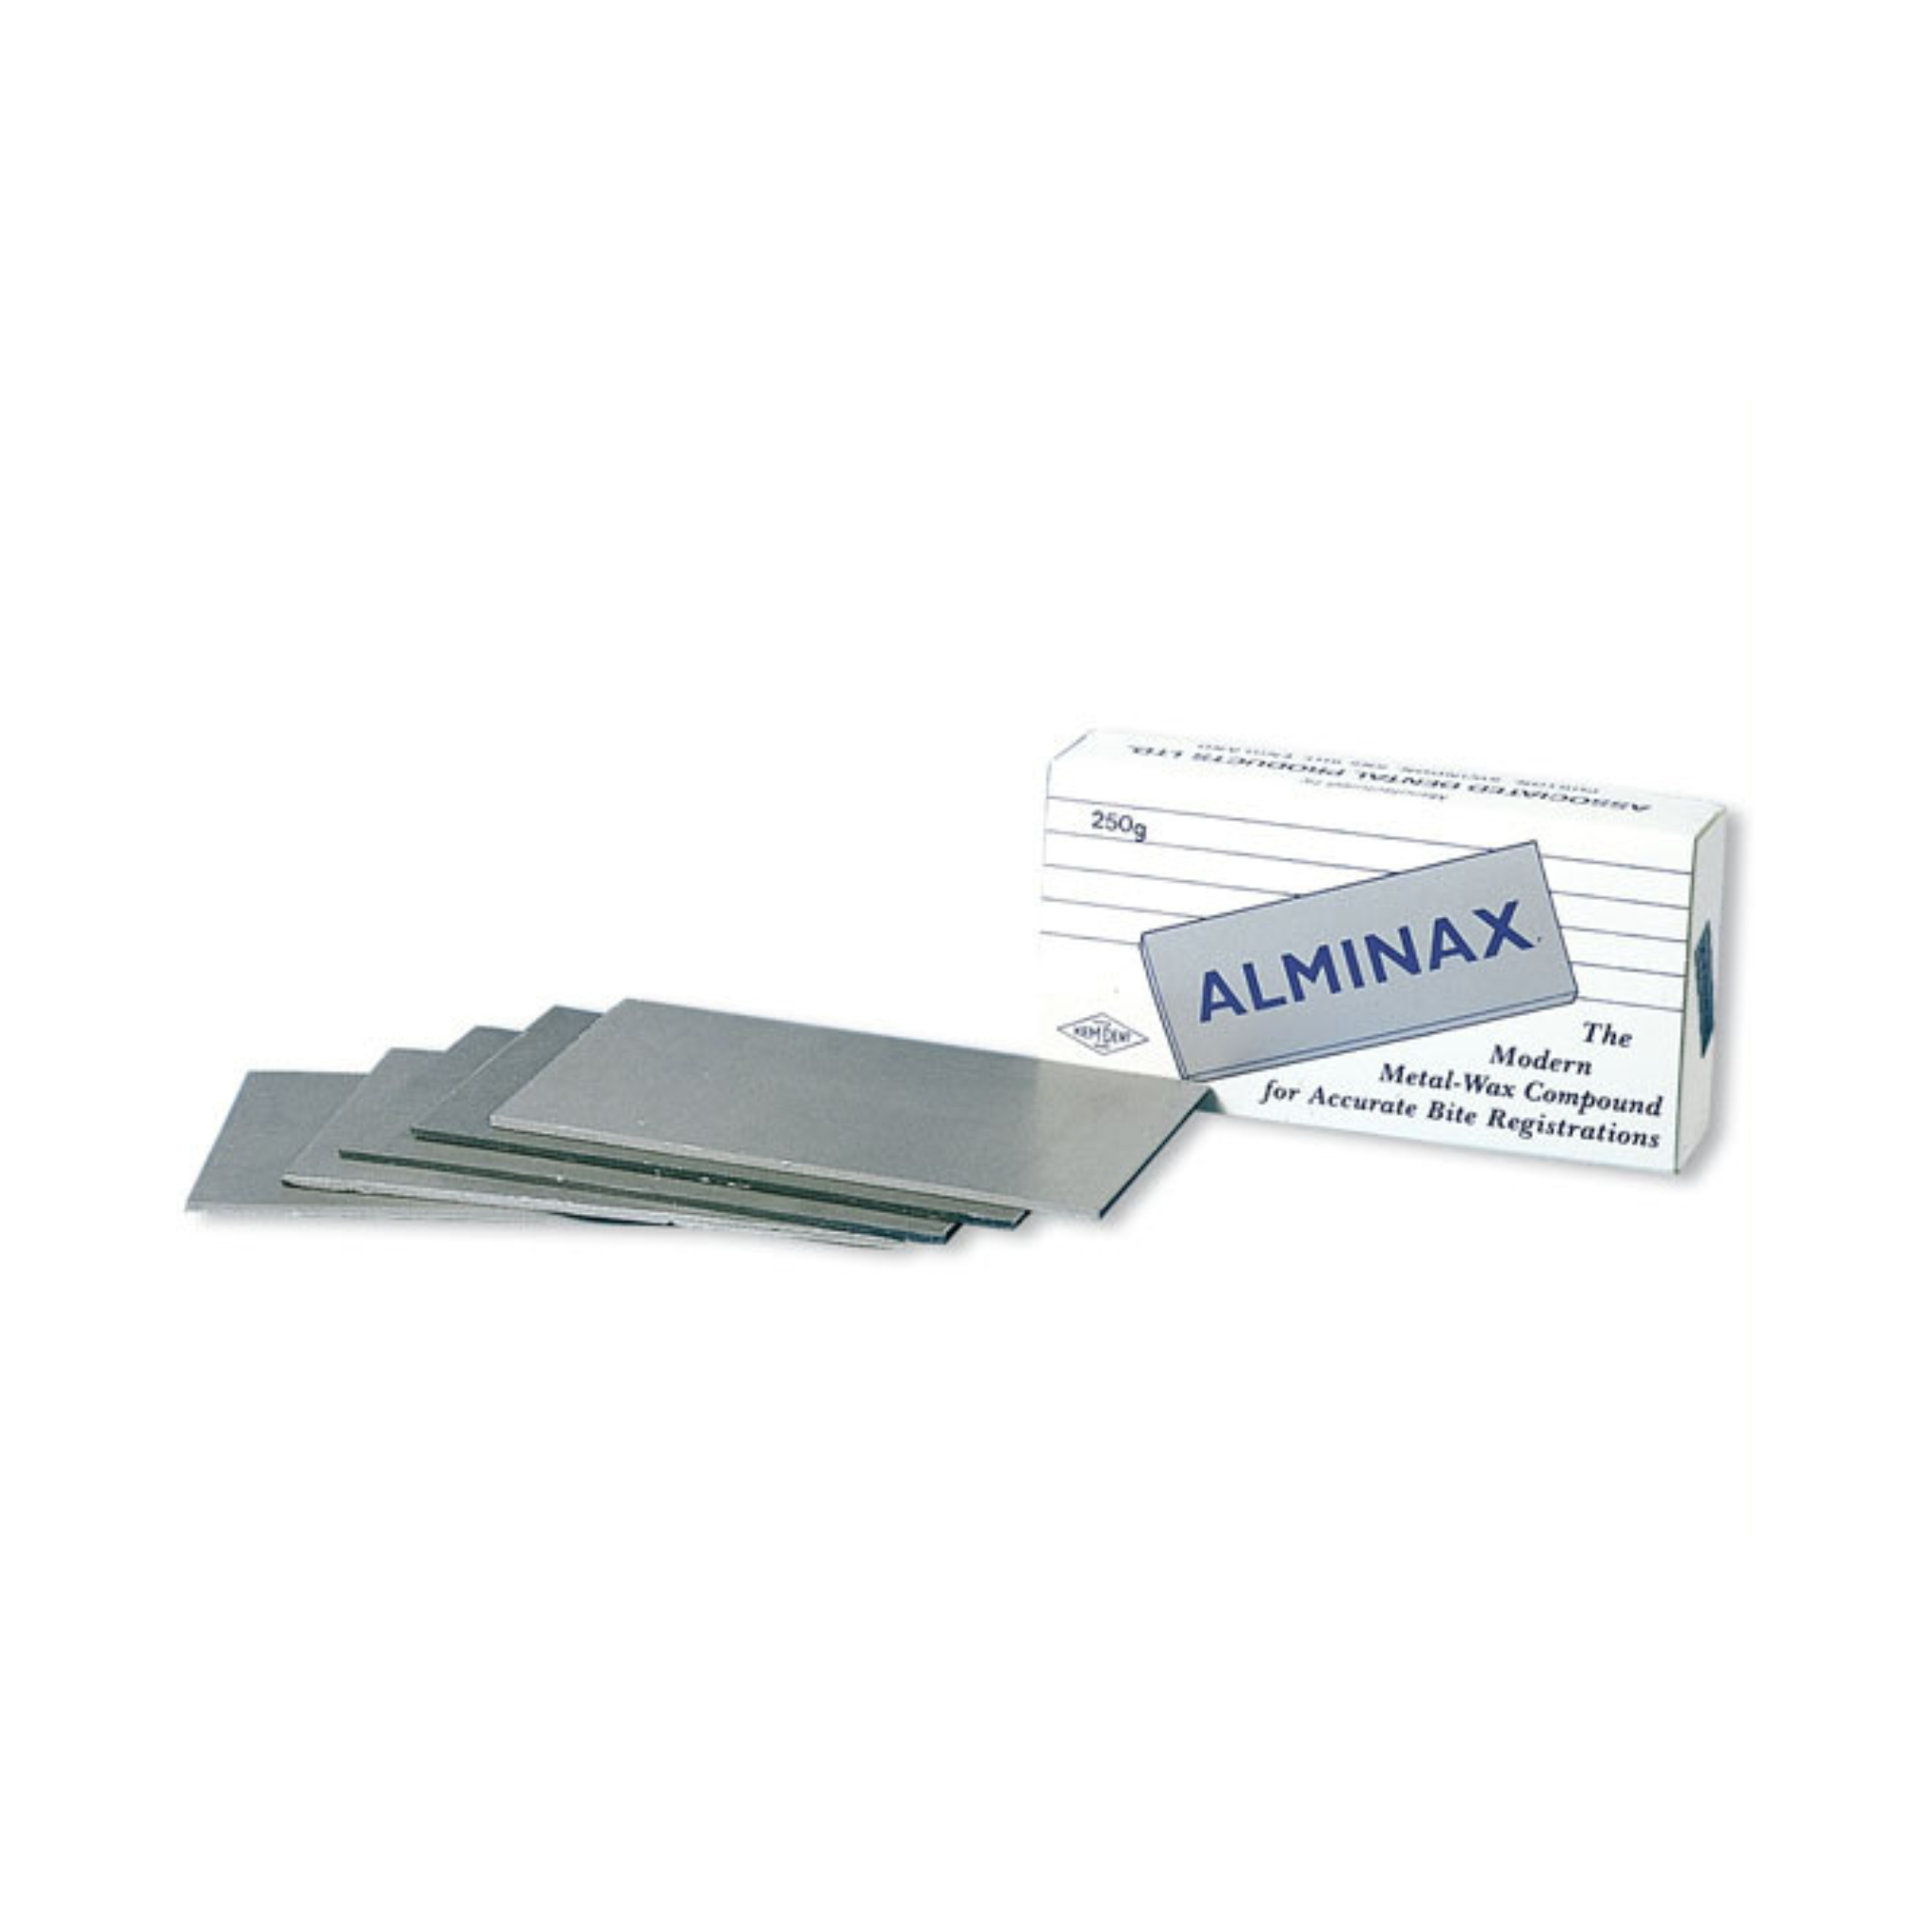 Alminax aluminium wax pack of 250 g